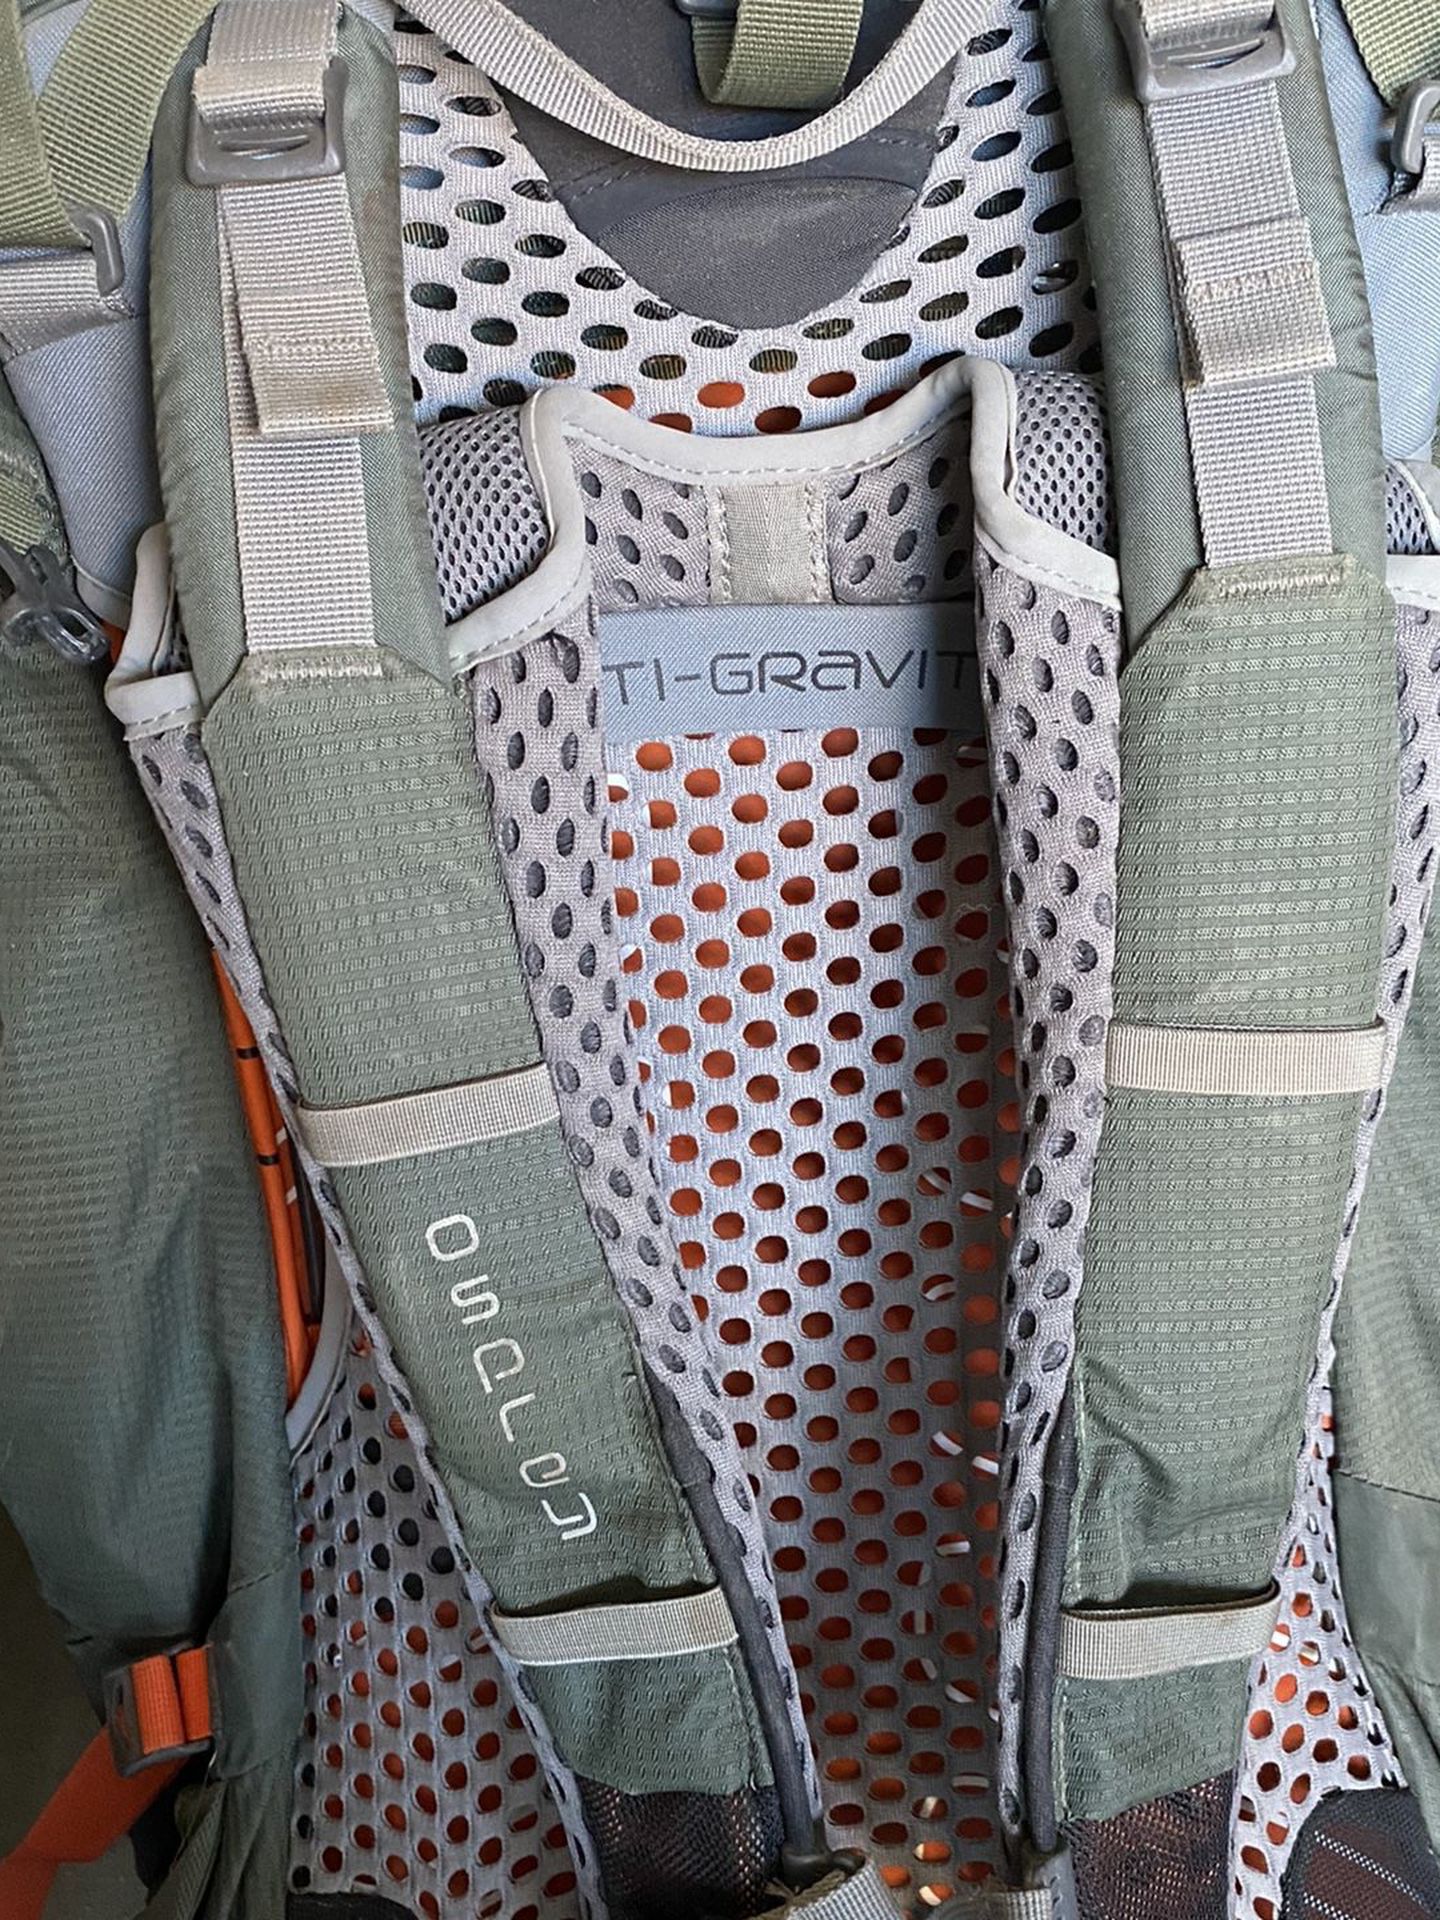 Ofsprey Back Pack Backpacking Pack Atmos 65 AG Like New $160 OBO Half Price 